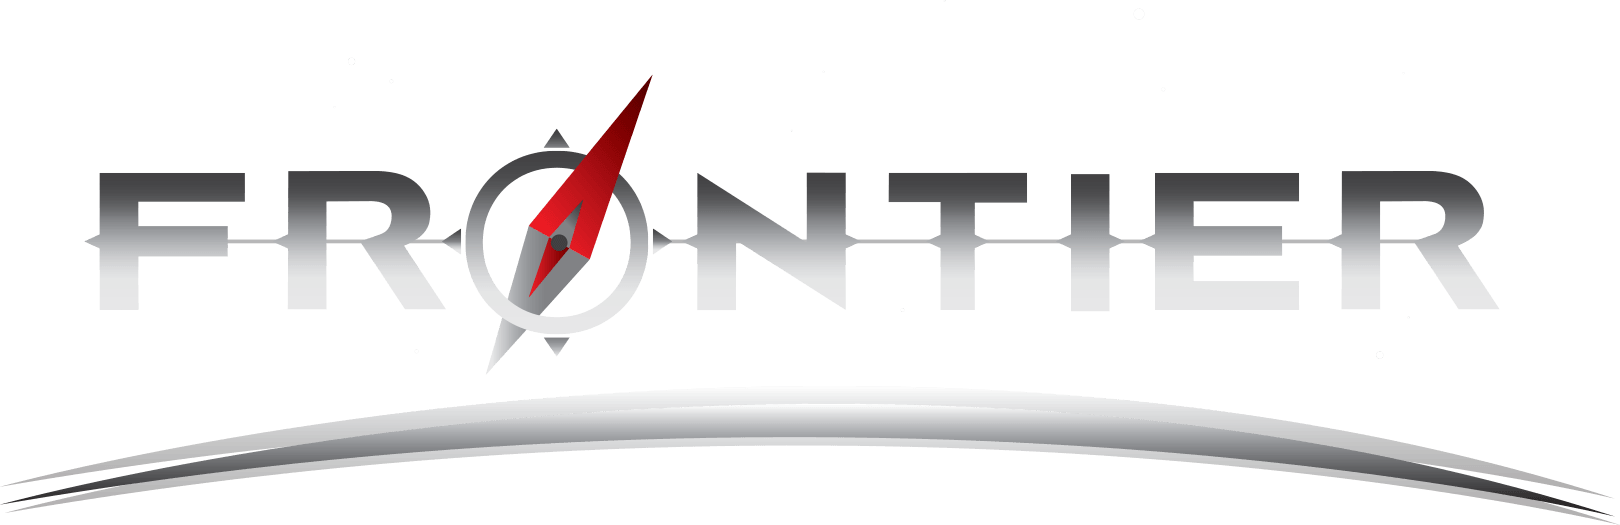 Caar Logo - CAAR accepting application team proposals for Frontier system